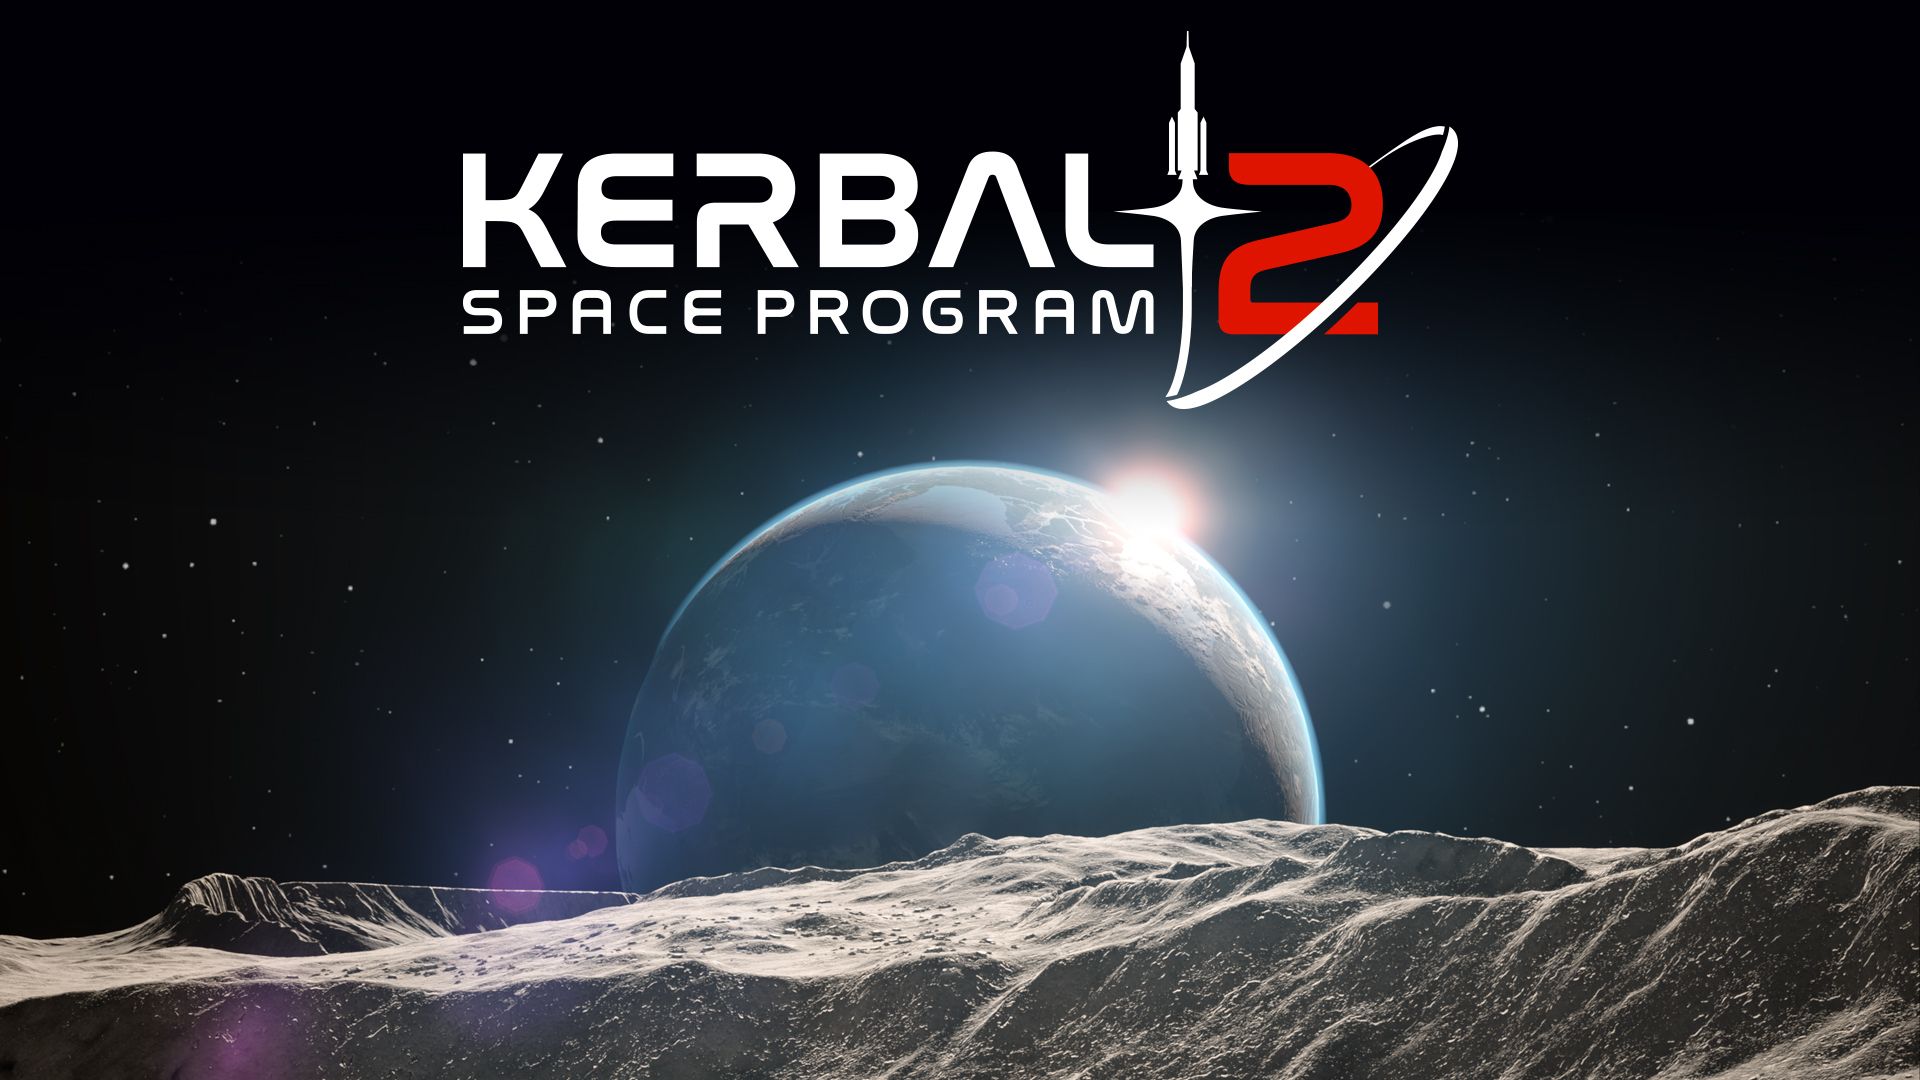 Kerbal Space Program 2 everything we know so far | Laptop Mag